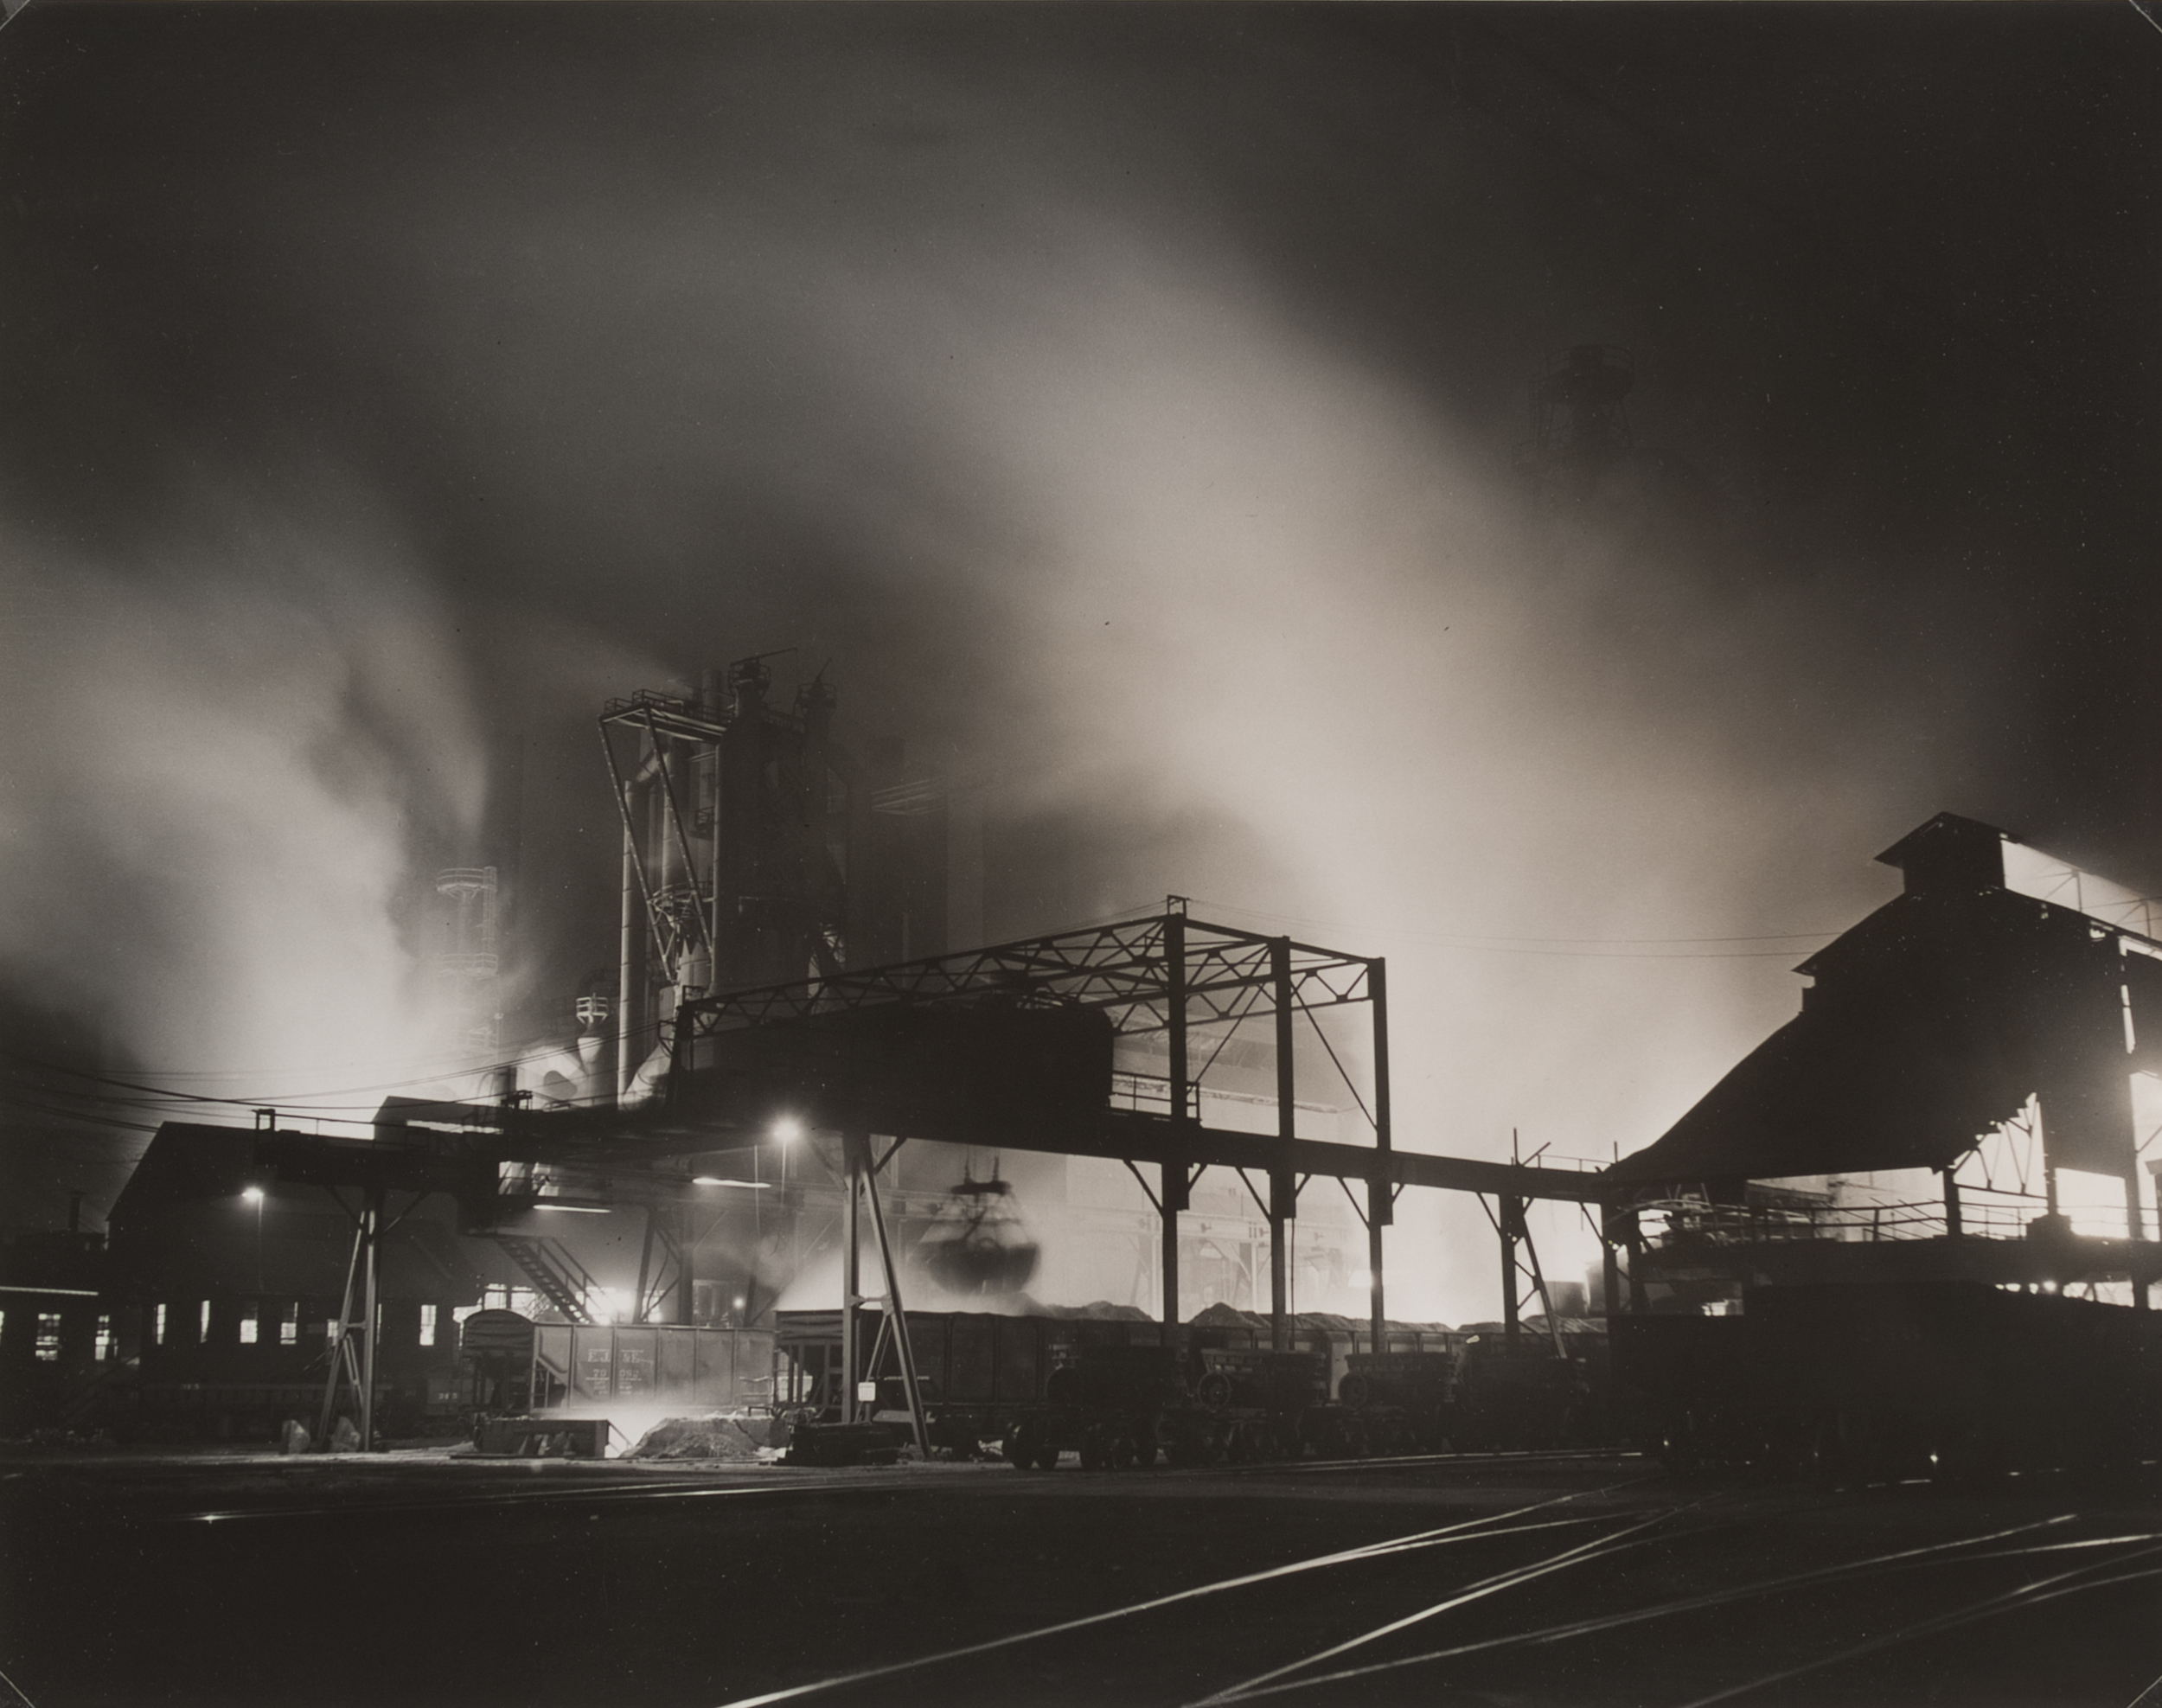 Industrial plant, railroad car, at night